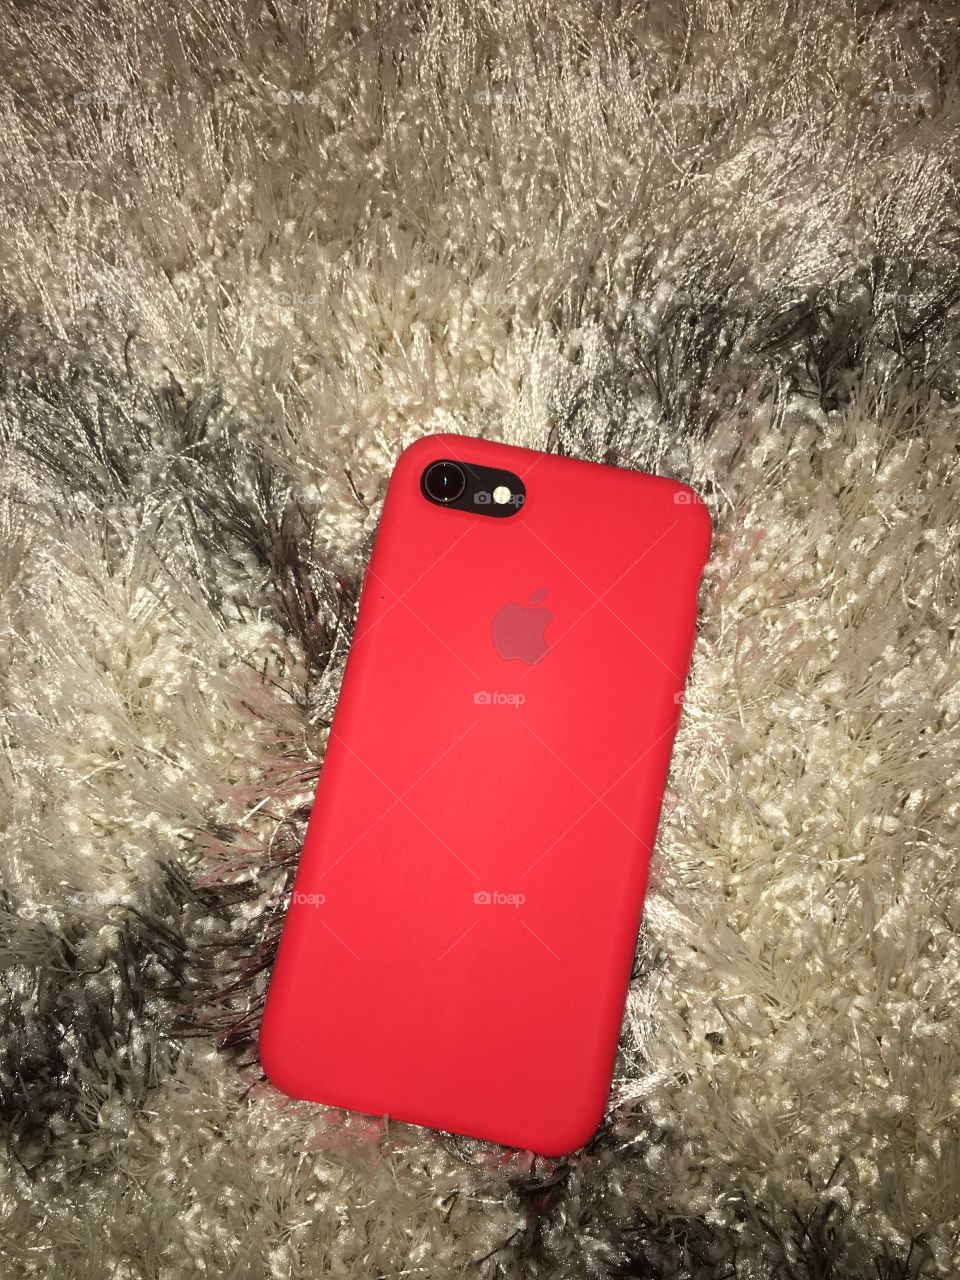 Beautiful iPhone case